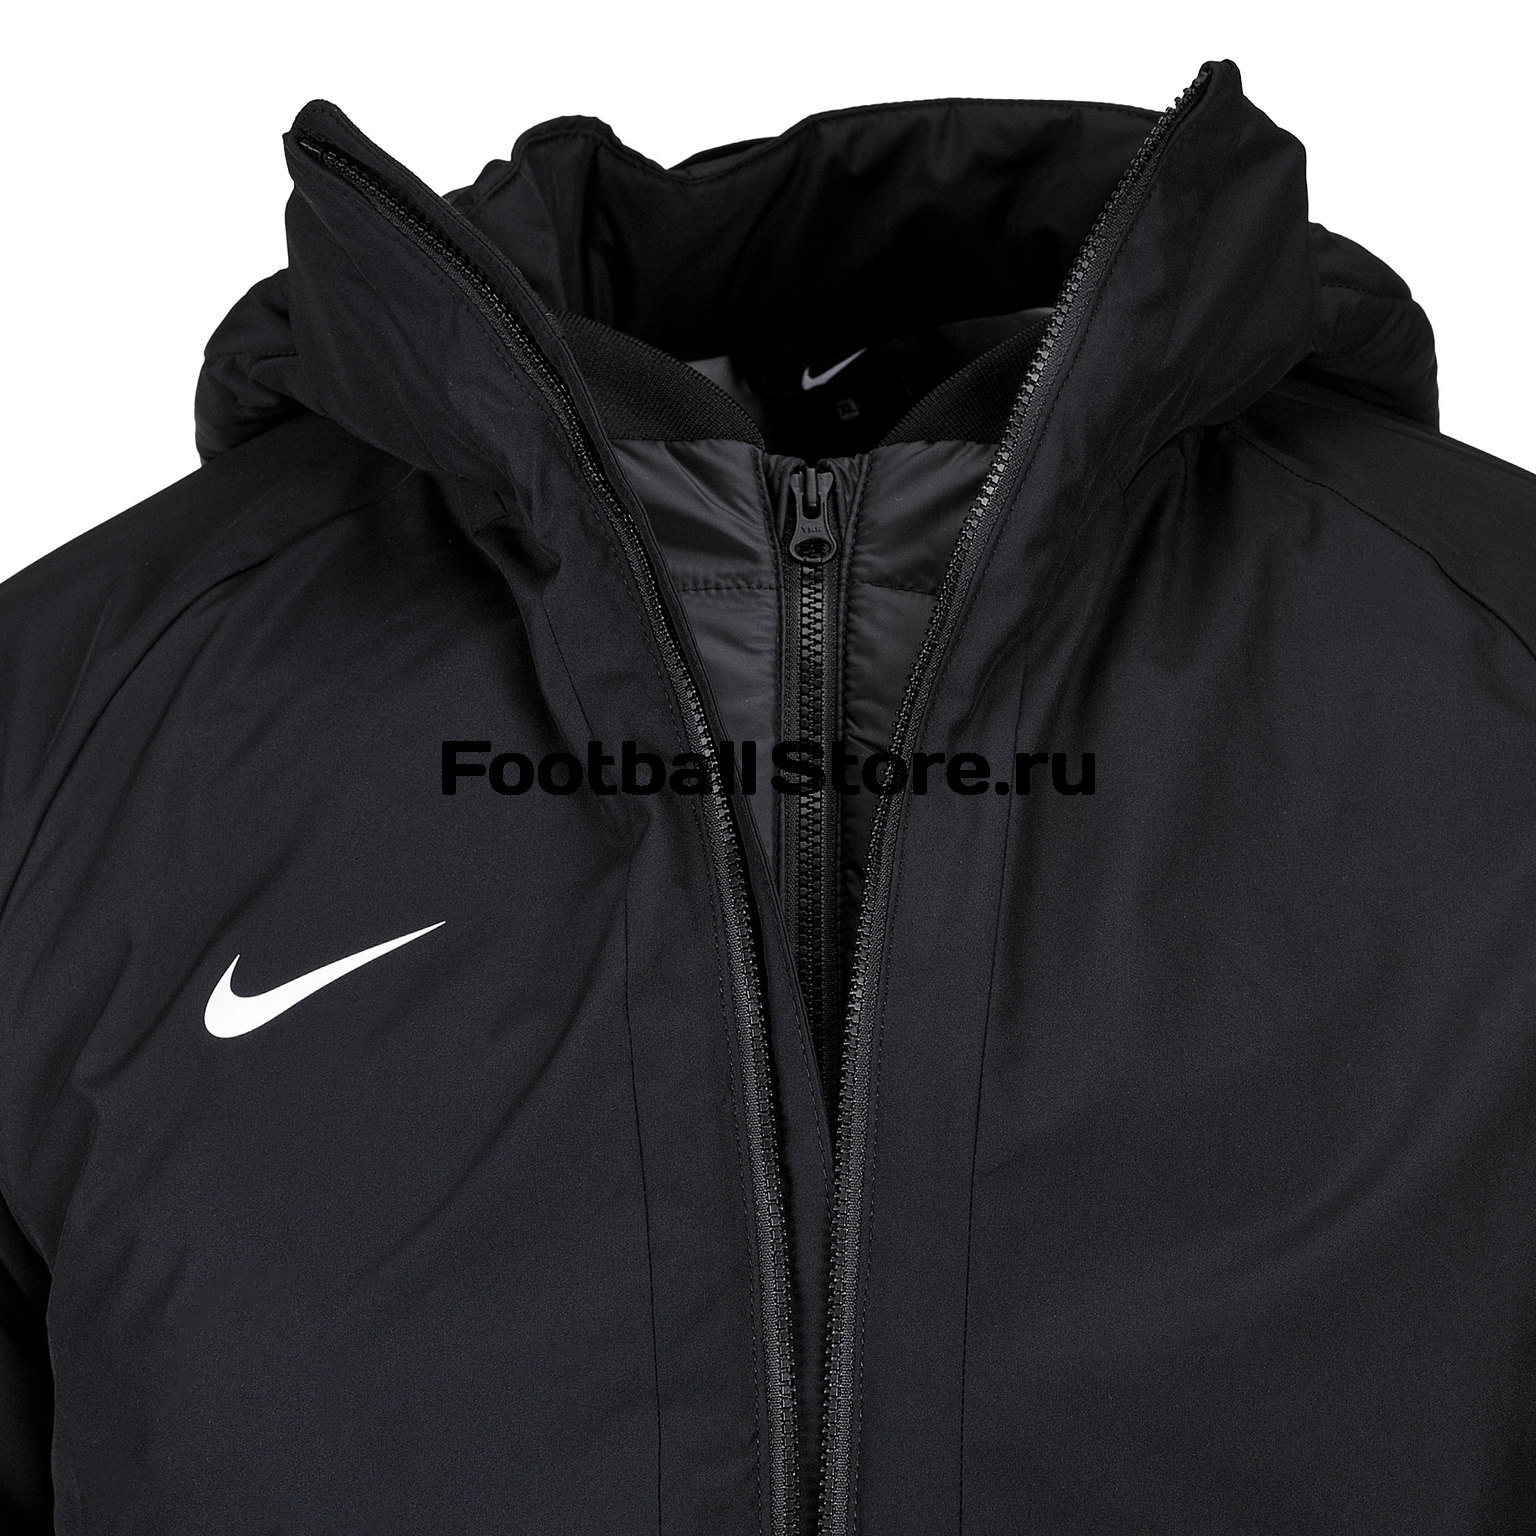 Куртка подростковая Nike Dry Academy18 Jacket 893827-010